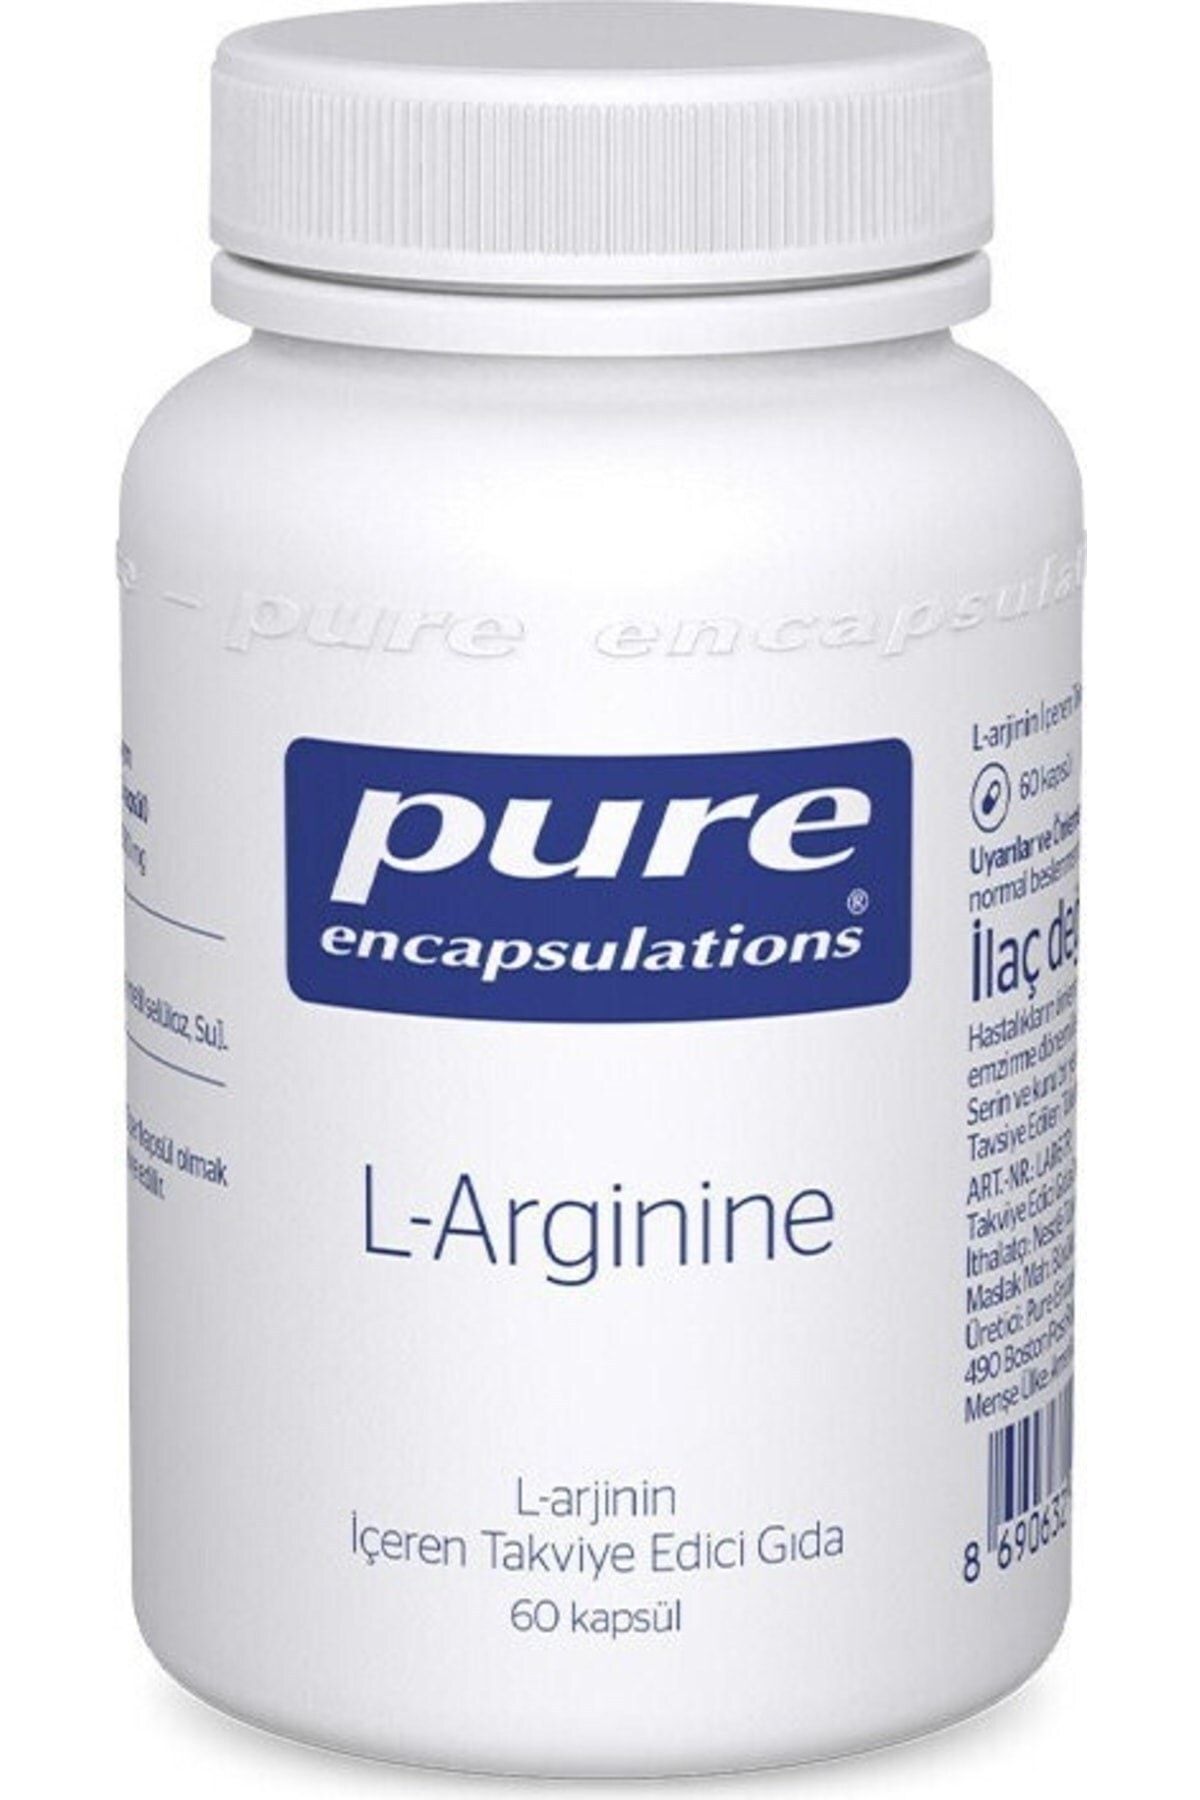 Pure Encapsulations L-arginine 60 Kapsül